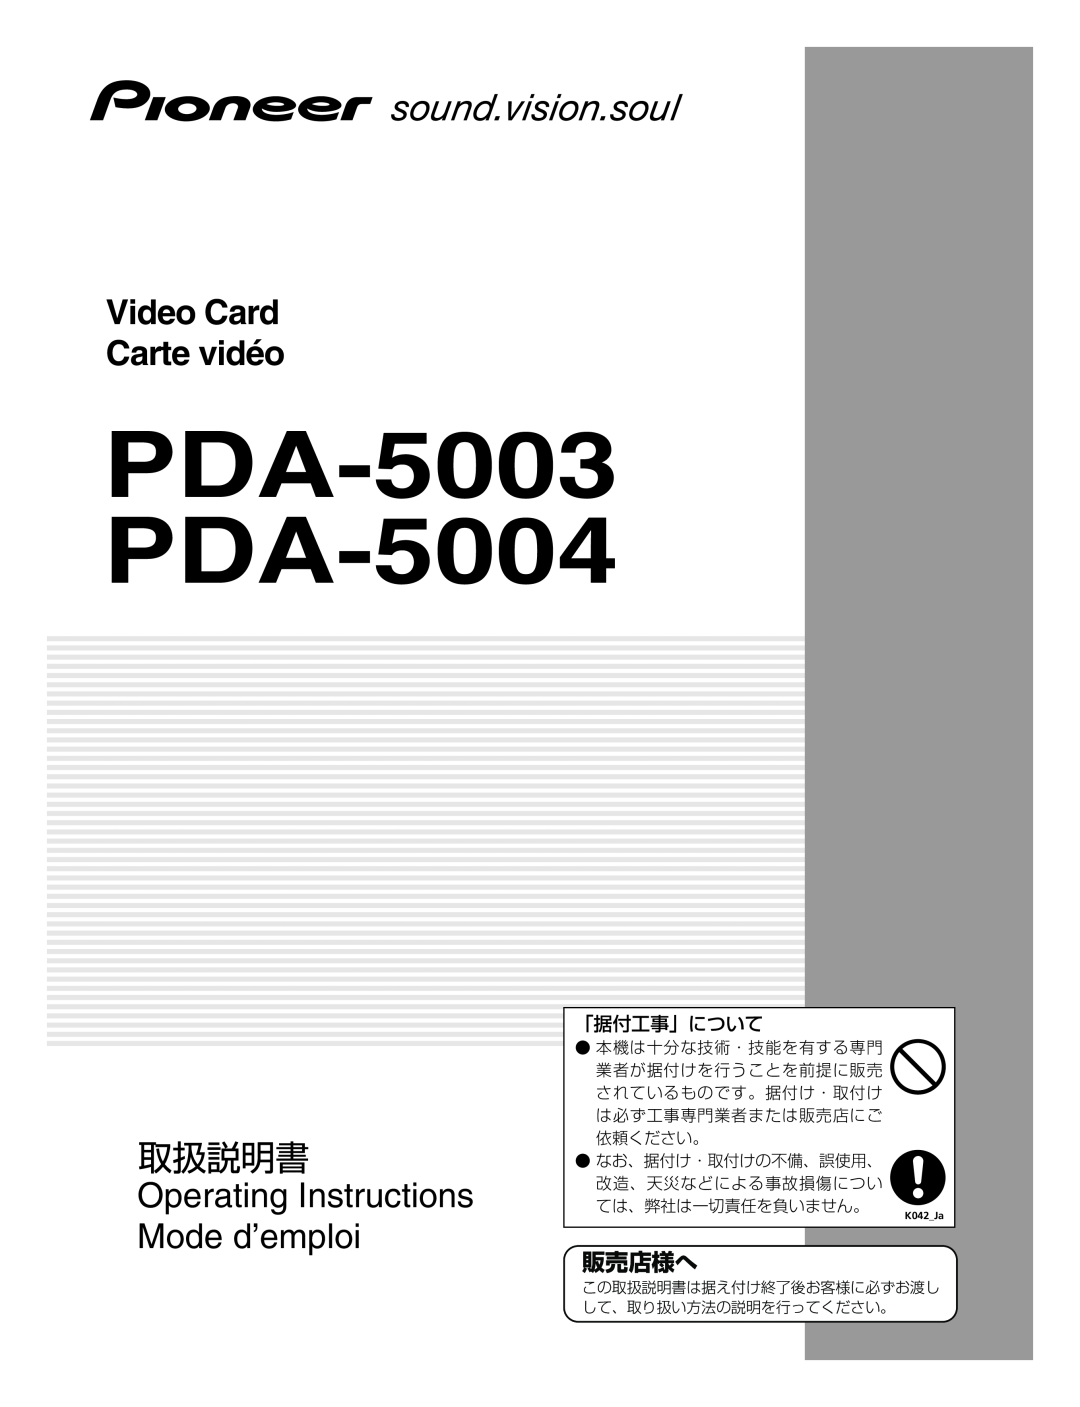 Pioneer manual PDA-5003 PDA-5004, Video Card Carte vidéo, Operating Instructions, Mode d’emploi, 販売店様へ, 「据付工事」について 